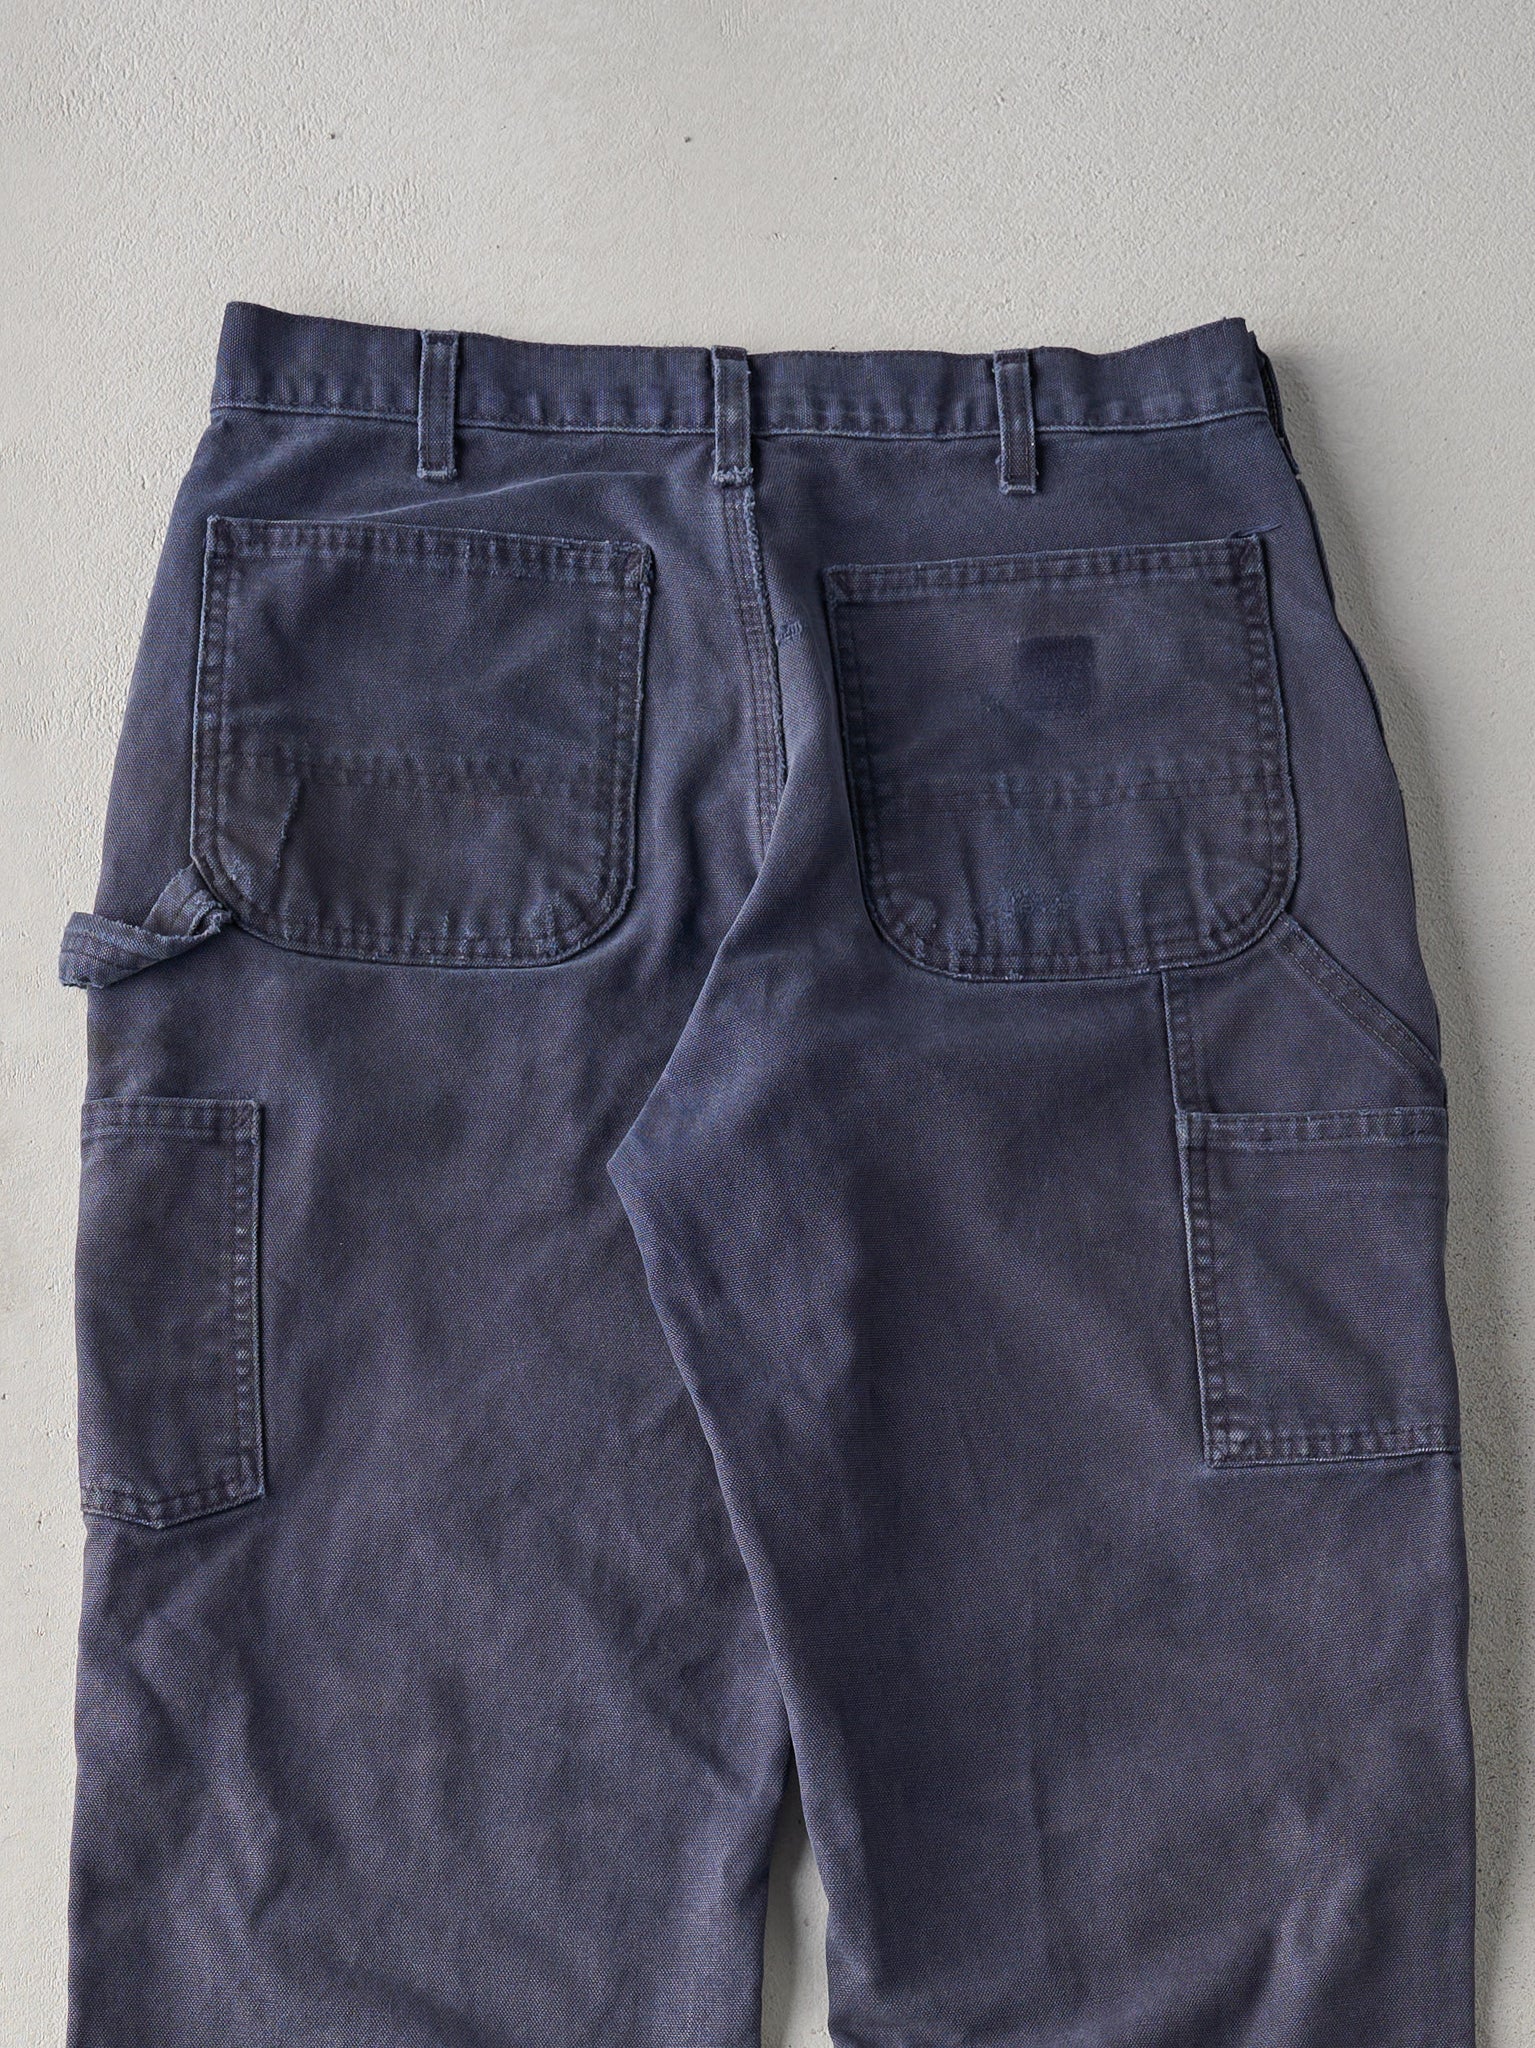 Vintage 90s Navy Carhartt Dungaree Fit Carpenter Pants (32x28)